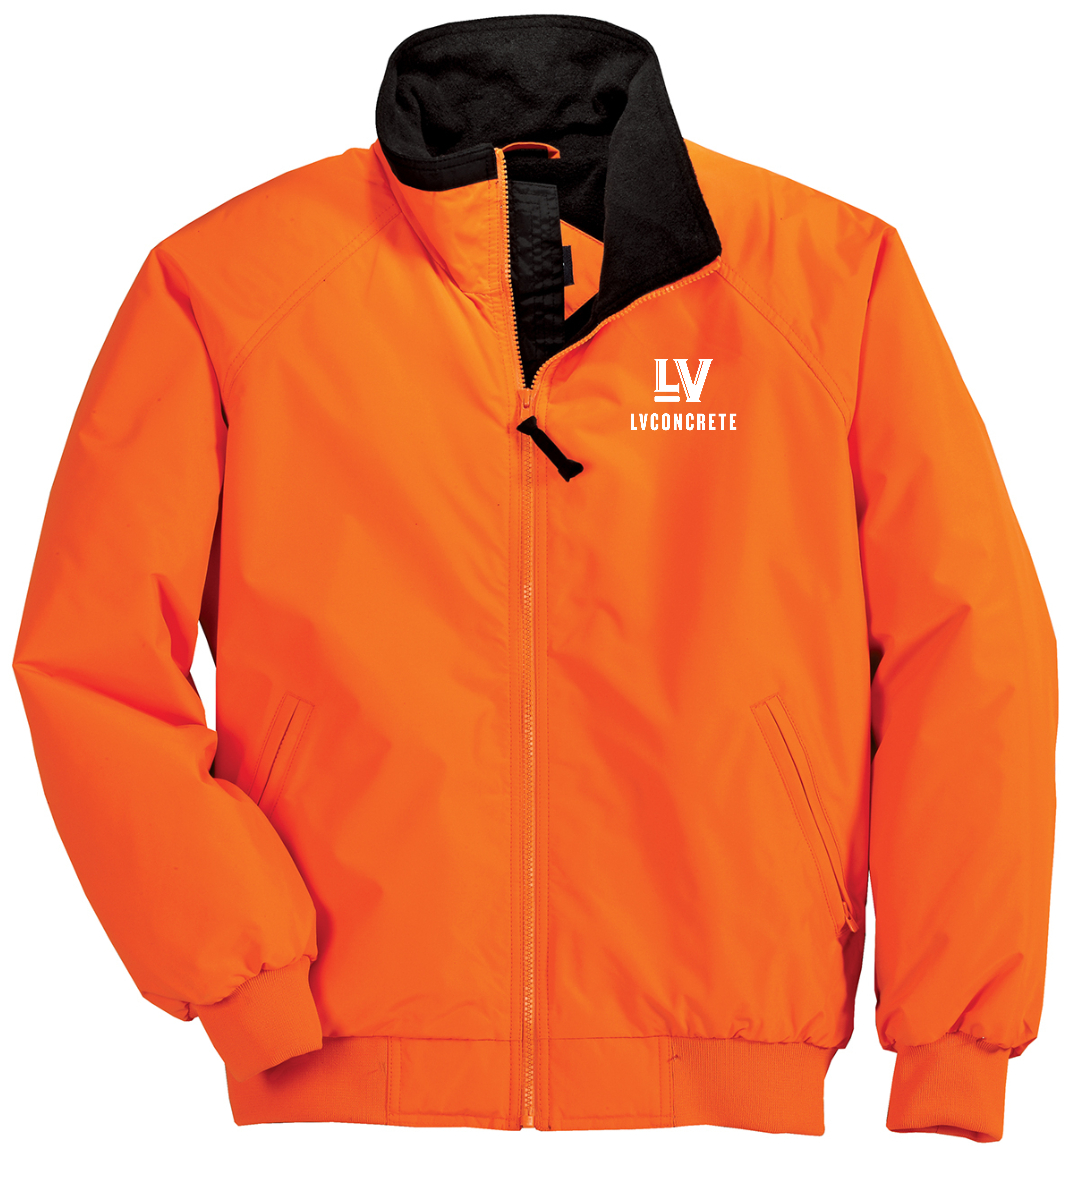 LV Concrete Standard Enhanced Visibility Challenger Jacket